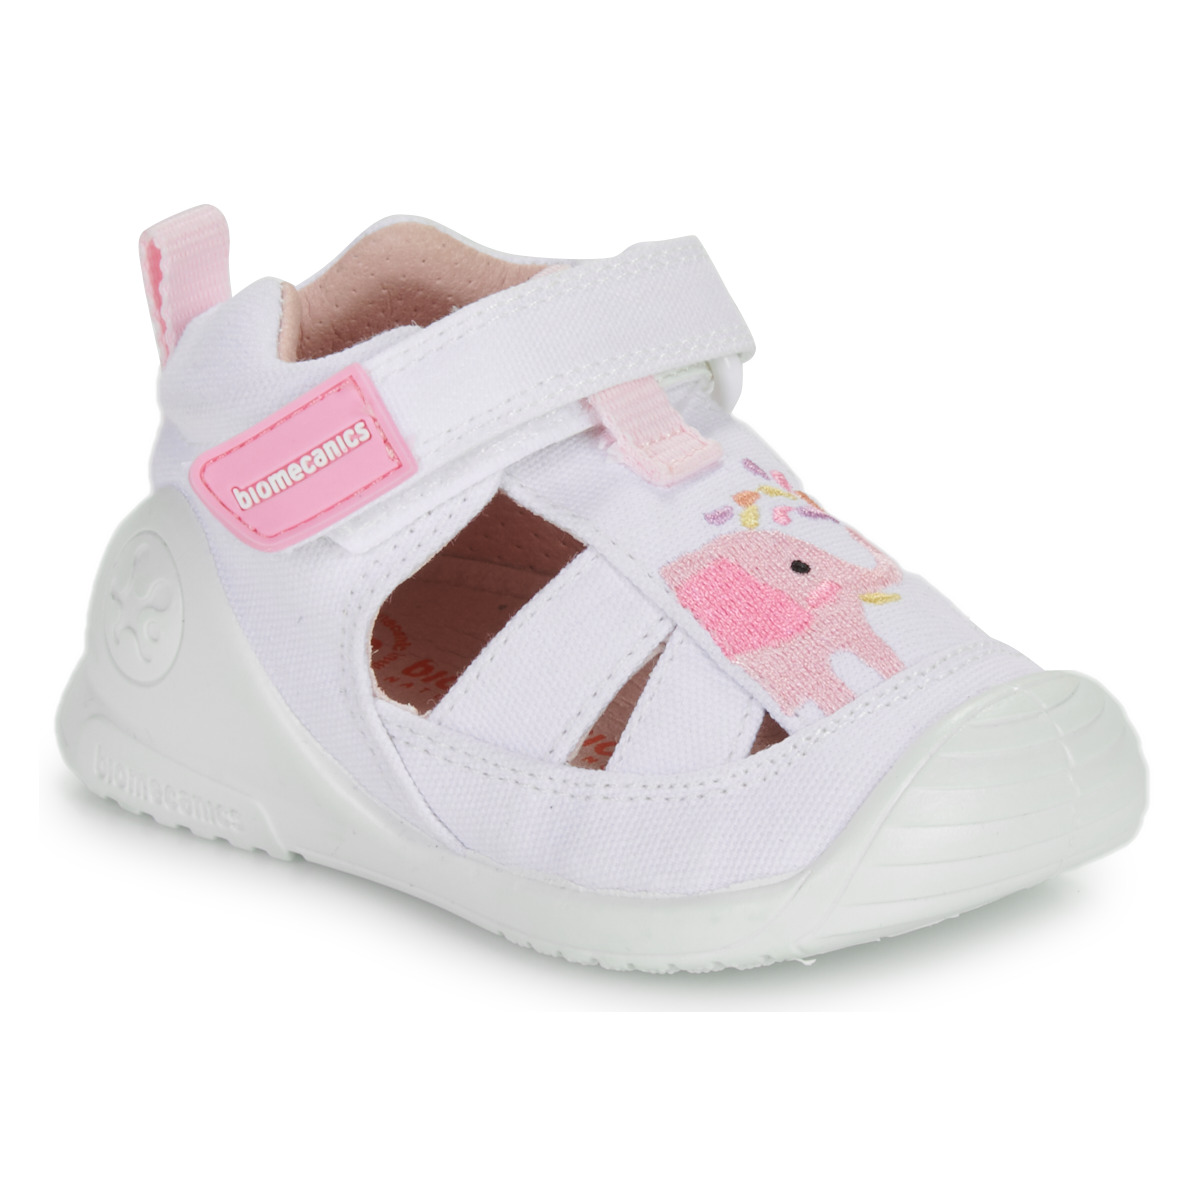 Chaussures Fille Sandales et Nu-pieds Biomecanics SANDALIA ELEFANTE Blanc / Rose